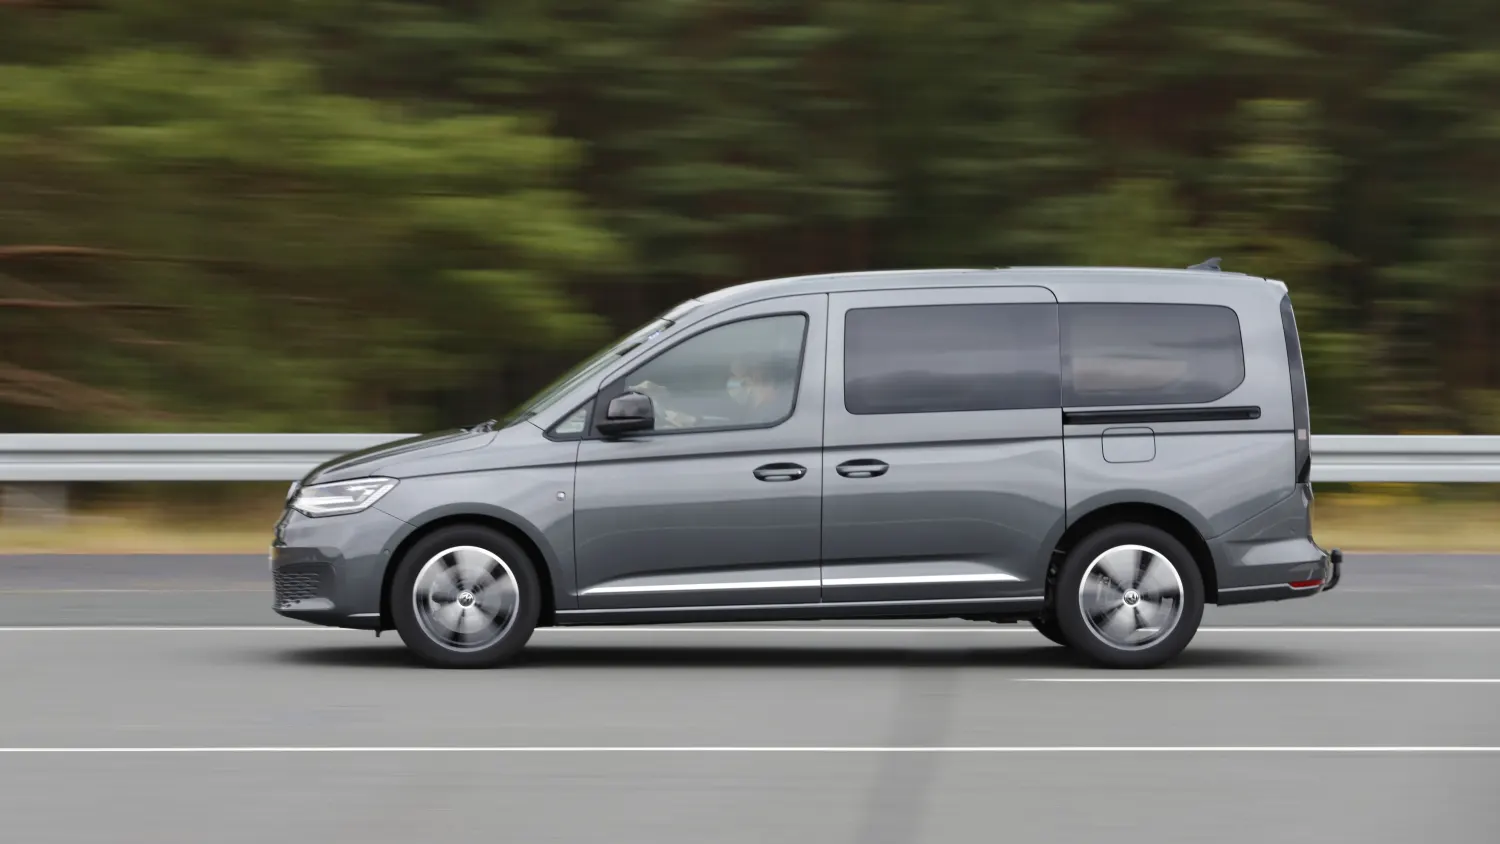 VW Caddy taugt als Familienauto und Transporter: Fahrbericht